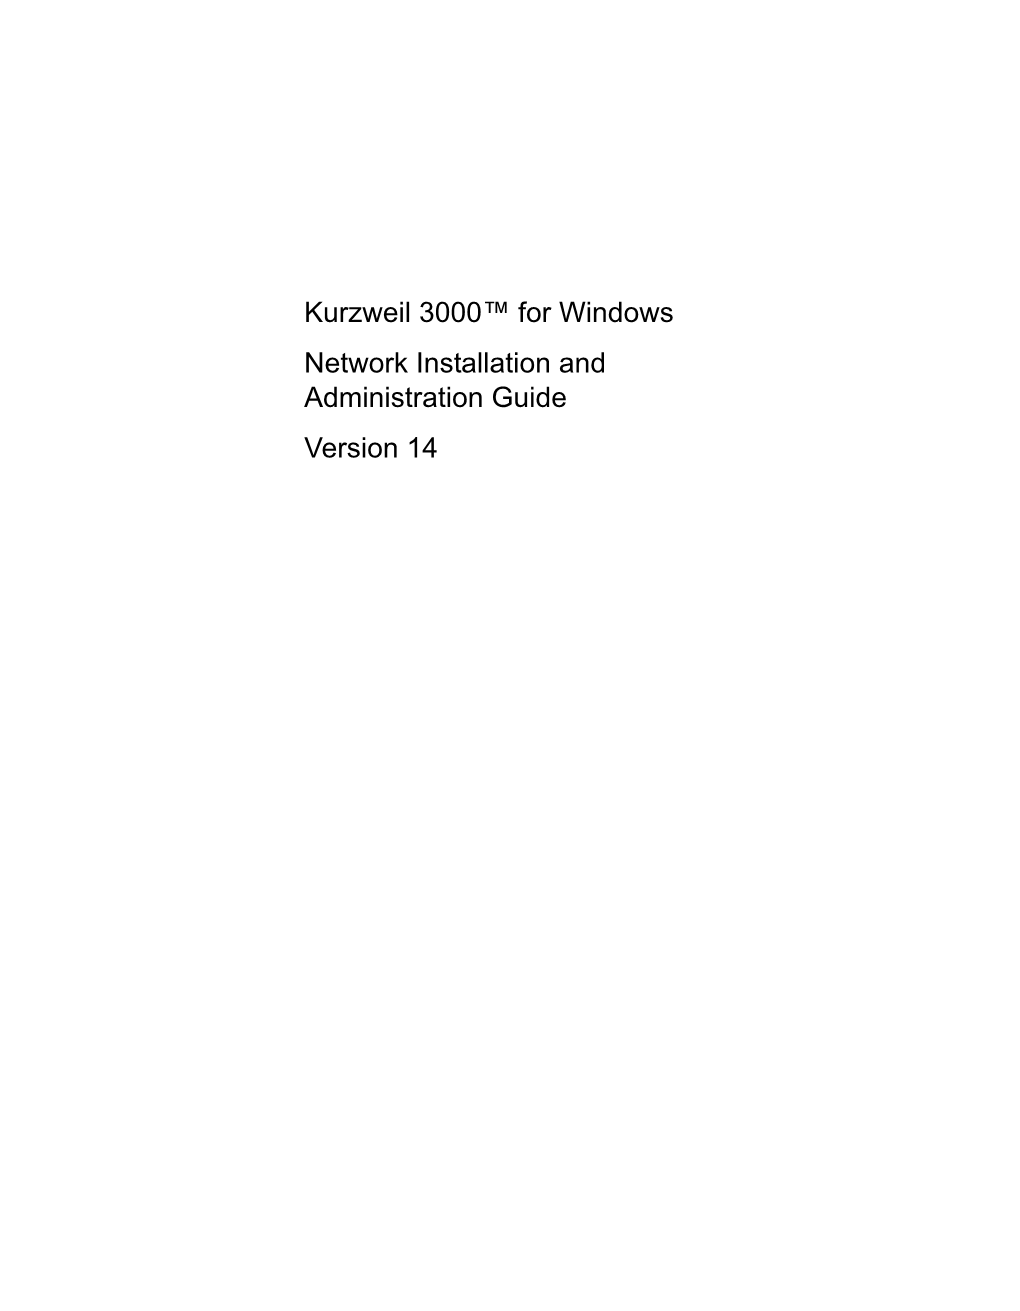 Kurzweil 3000™ for Windows Network Installation and Administration Guide Version 14 Kurzweil 3000™ for Windows Version 14 Network Edition